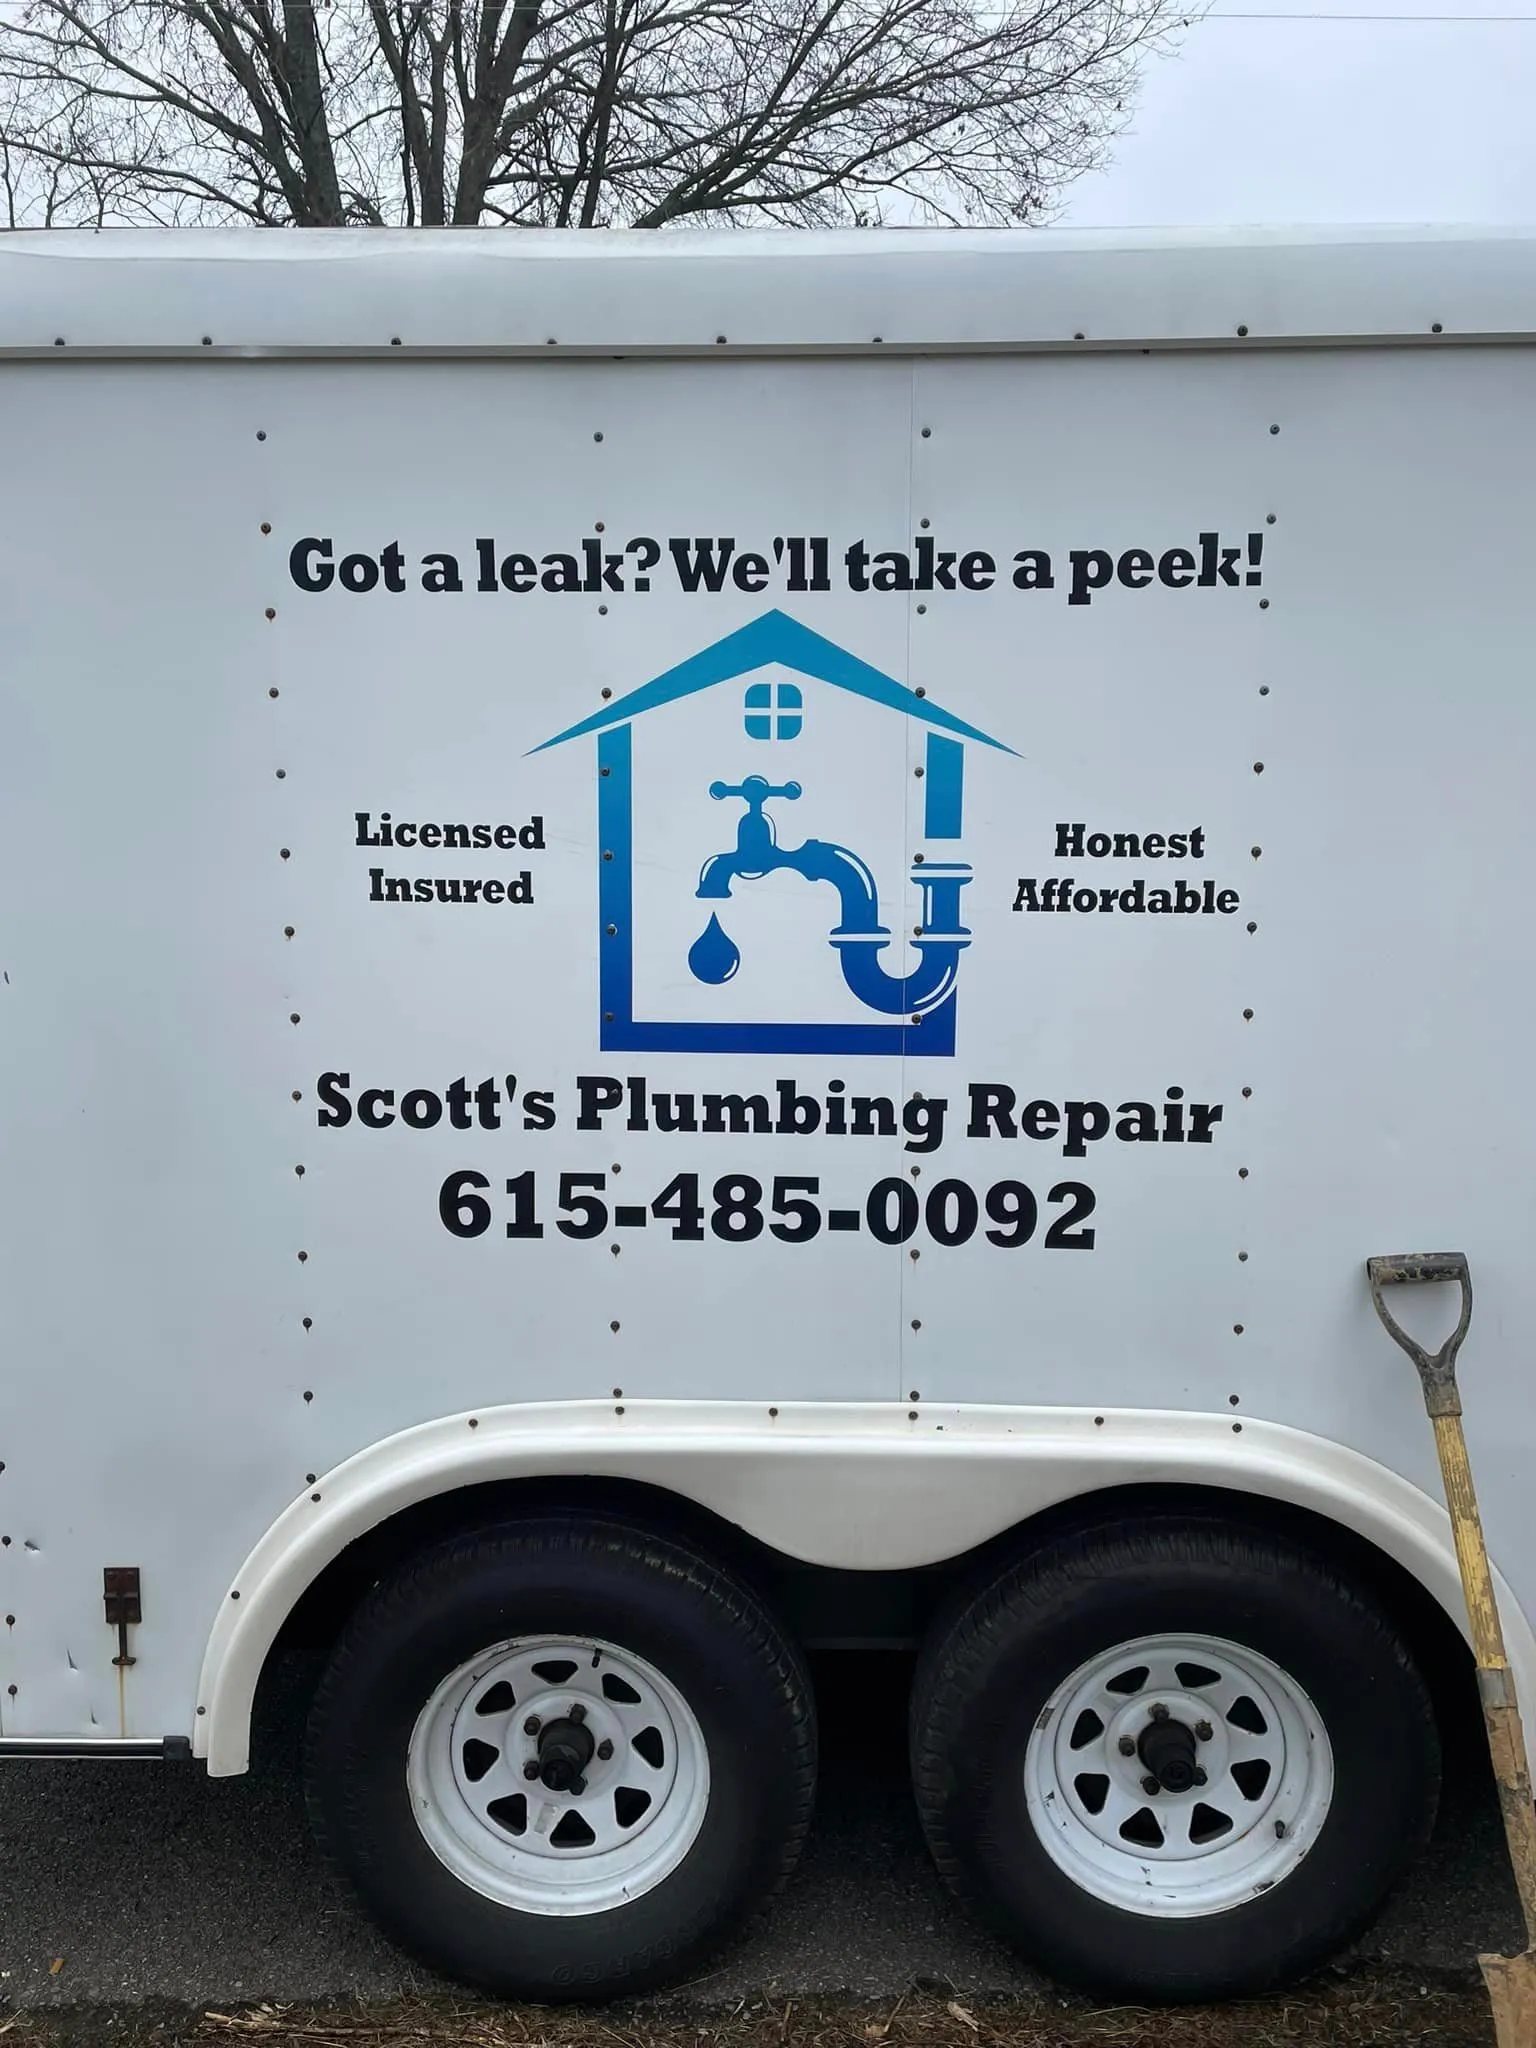 Plumbing Repairs for Scott's Plumbing Repair  in  Gallatin,  TN